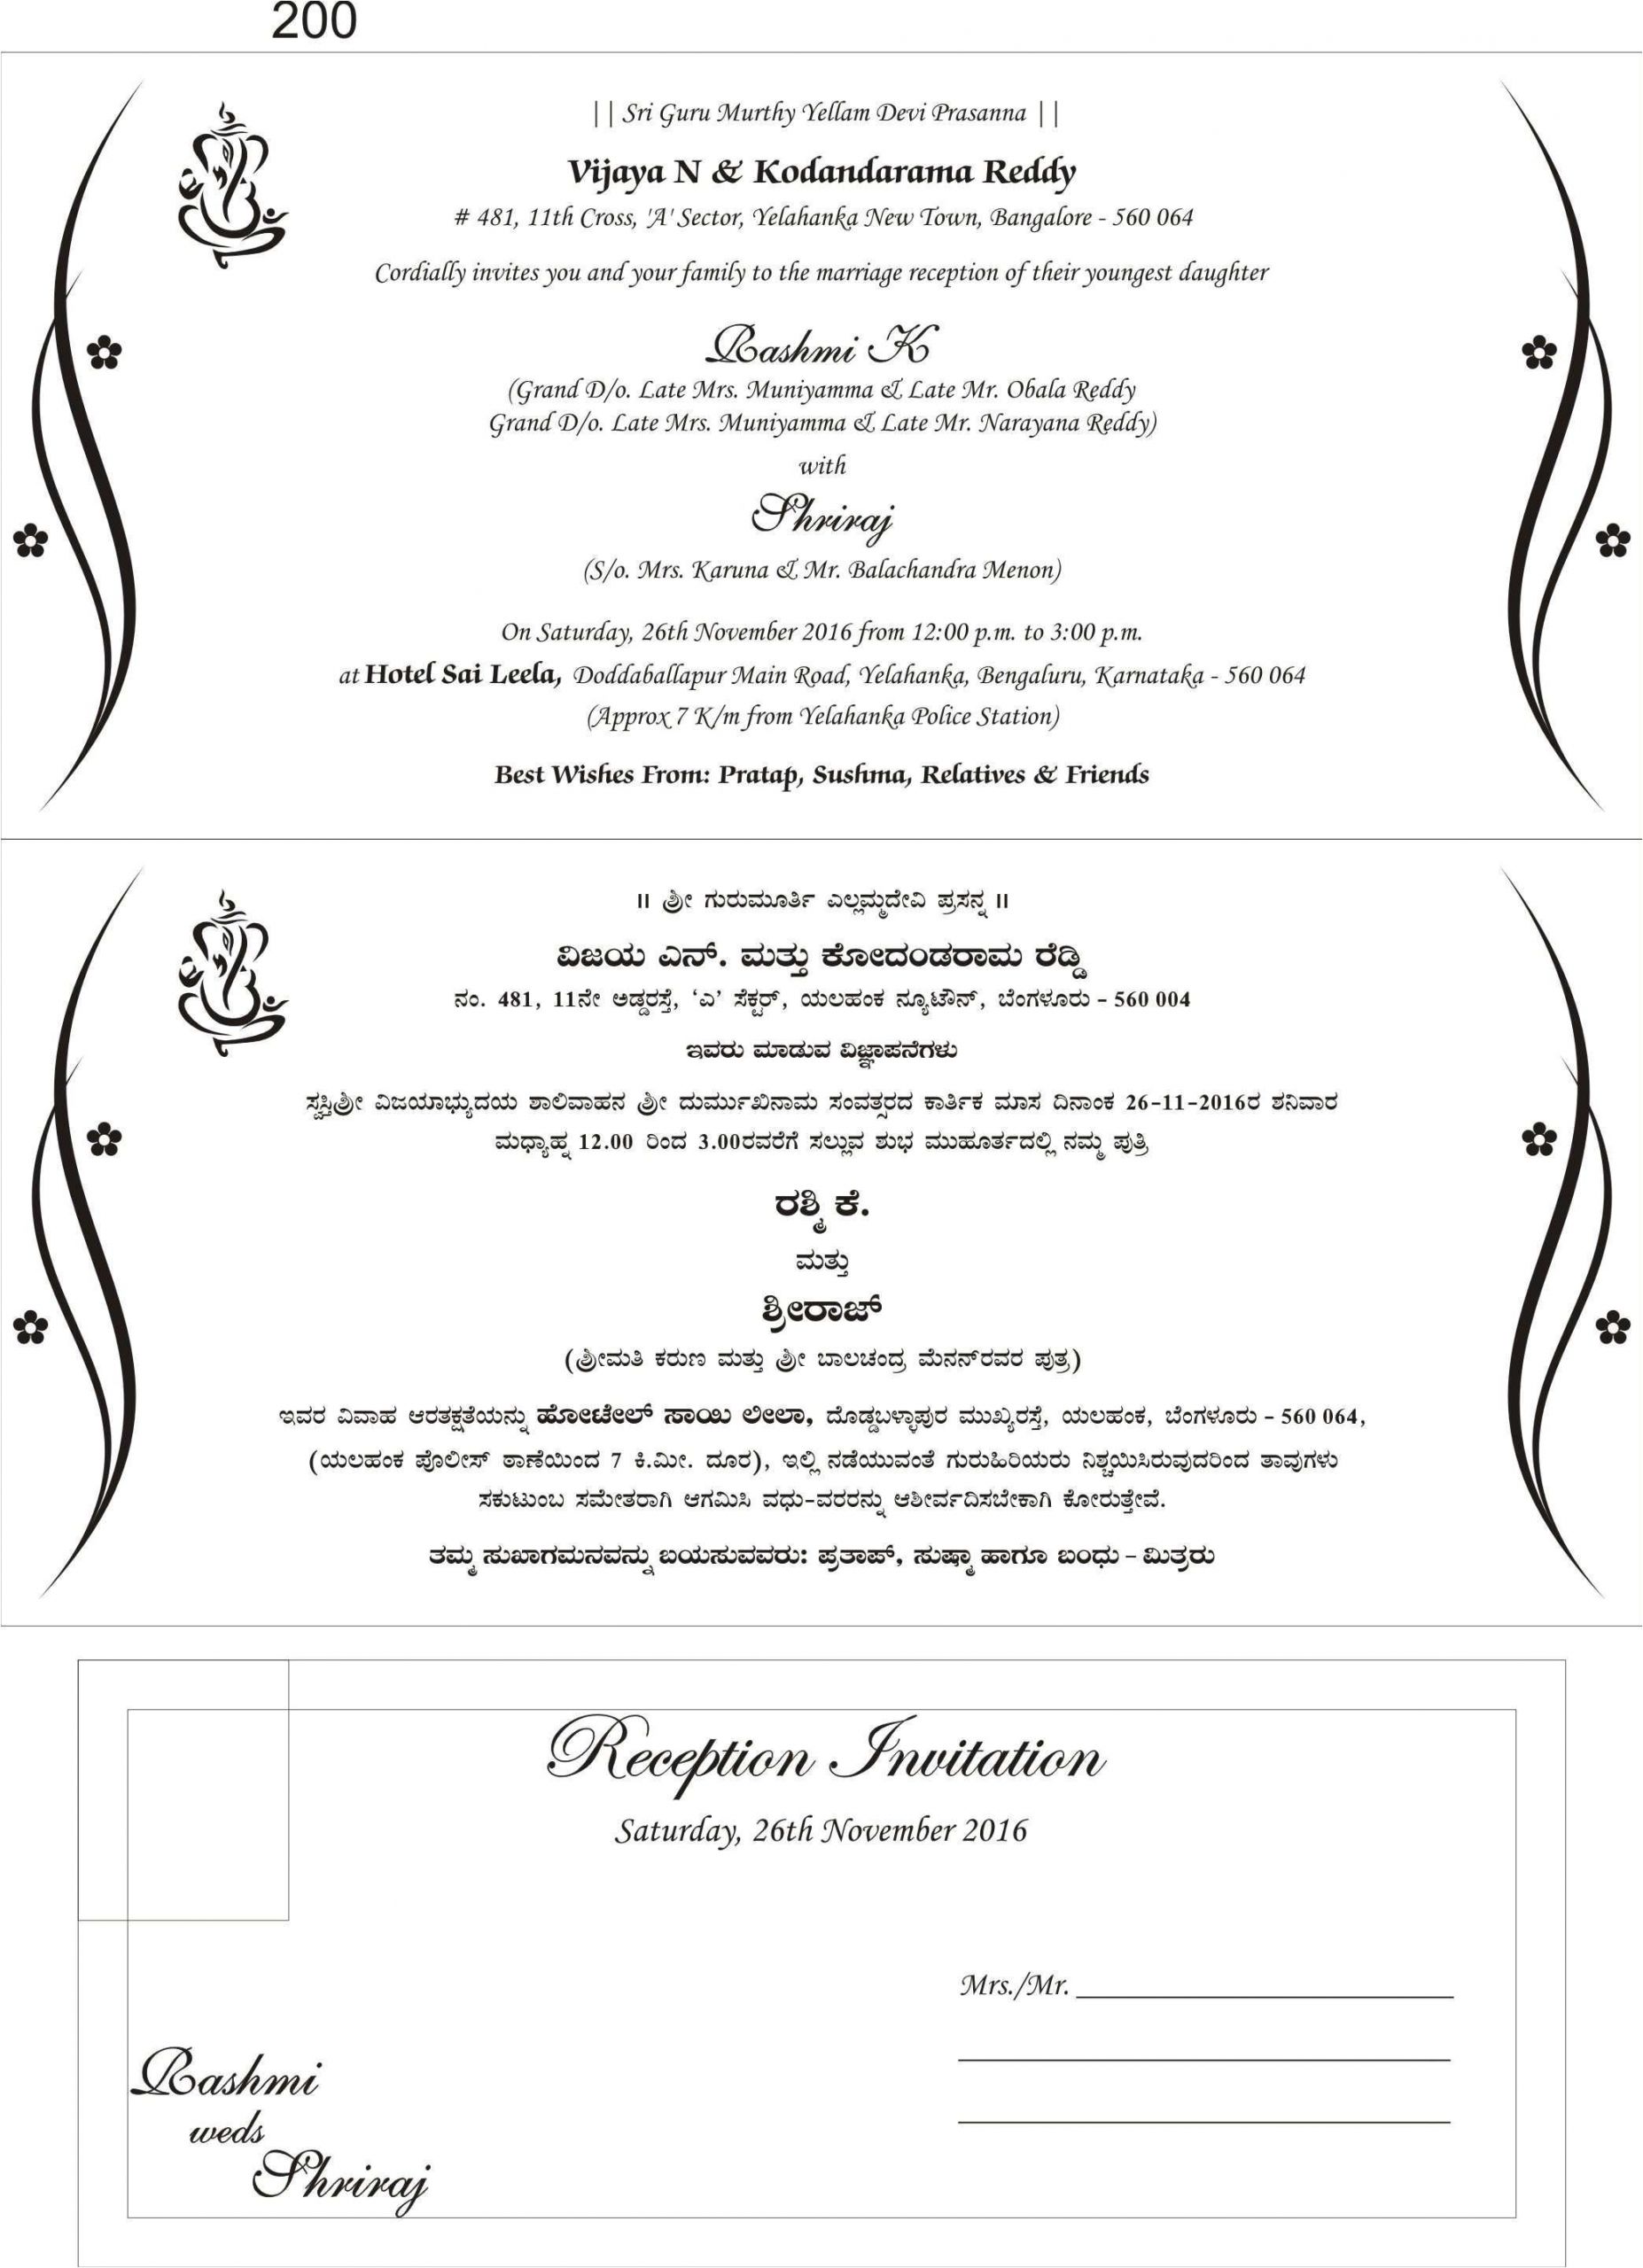 64 how to create kannada wedding invitation template layouts with kannada wedding invitation template jpg